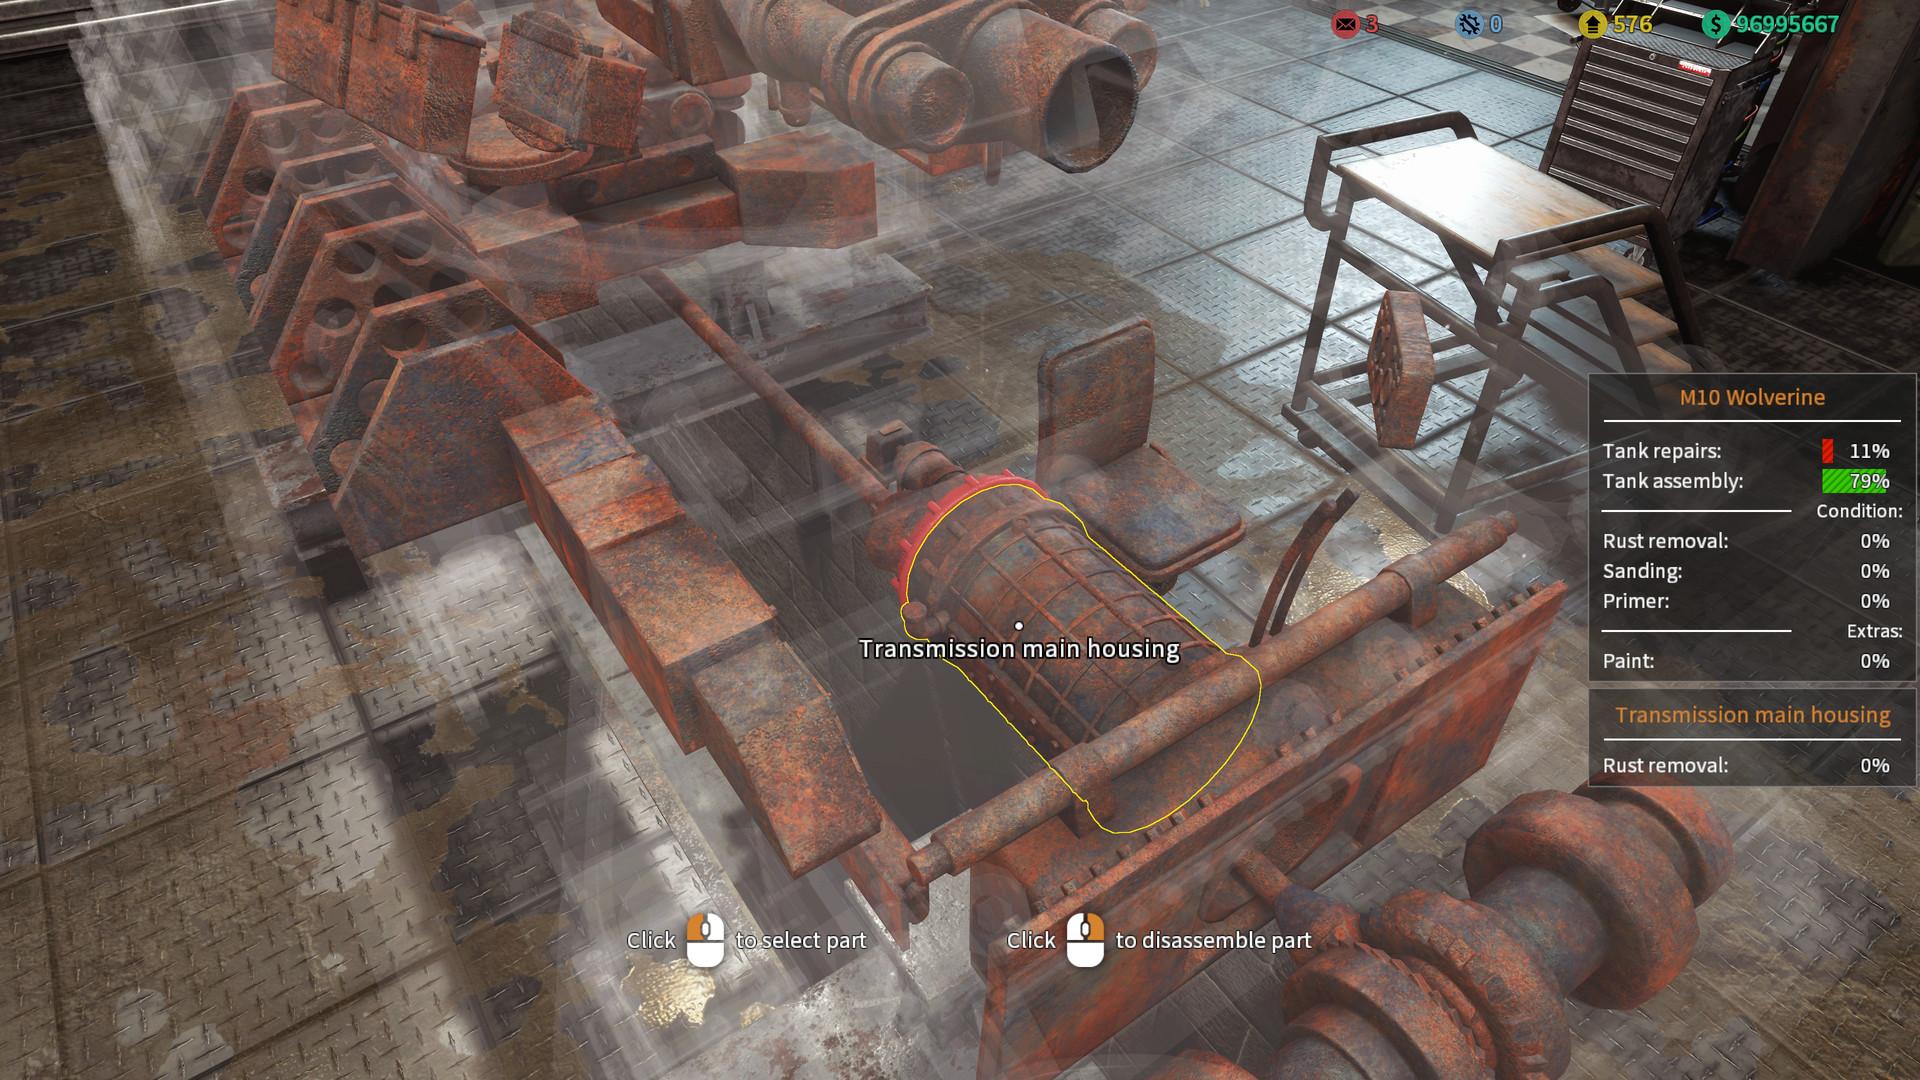 Screenshot №10 from game Tank Mechanic Simulator